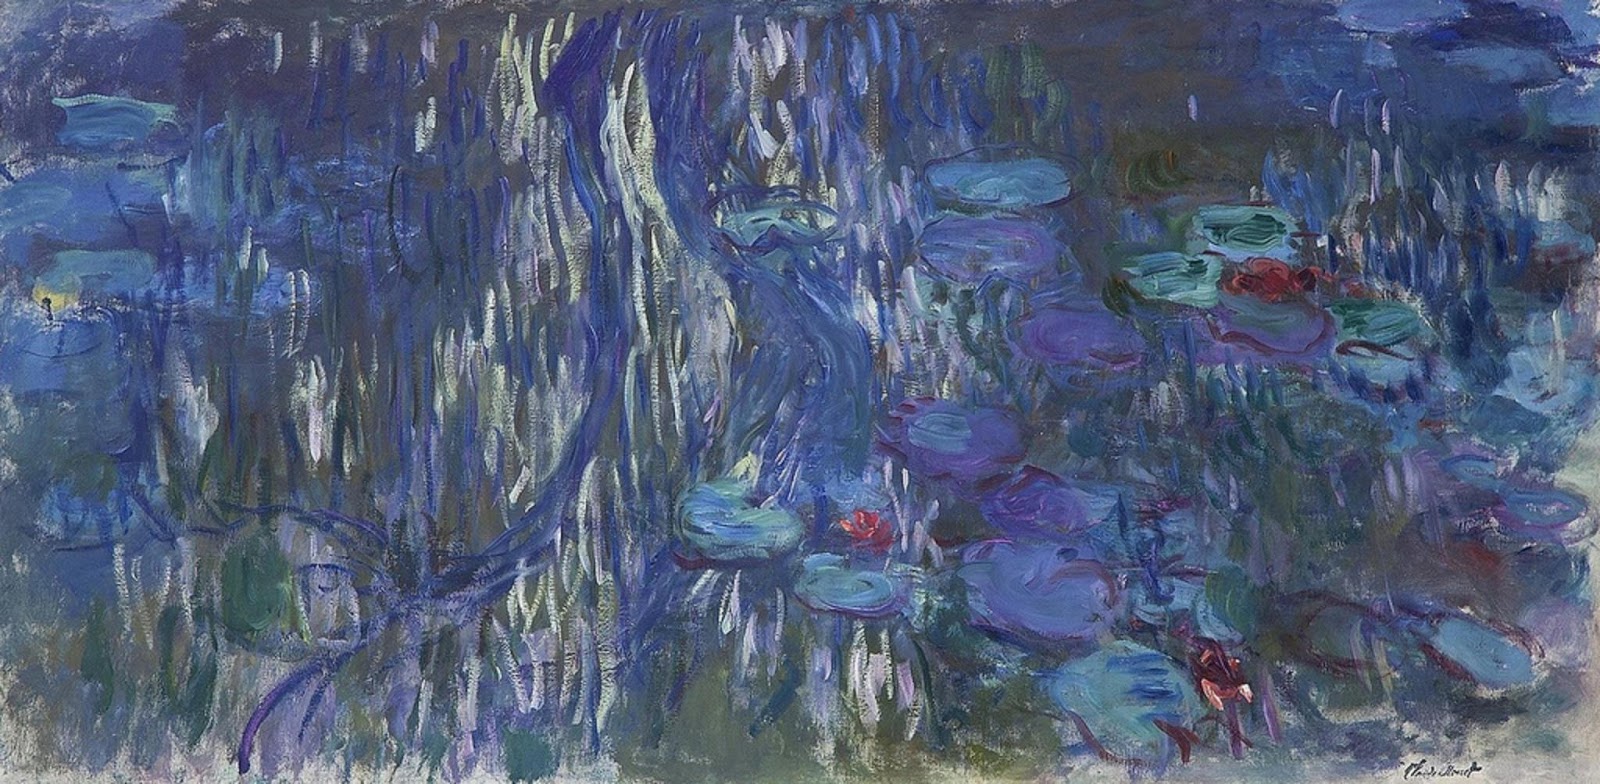 Claude+Monet-1840-1926 (543).jpg